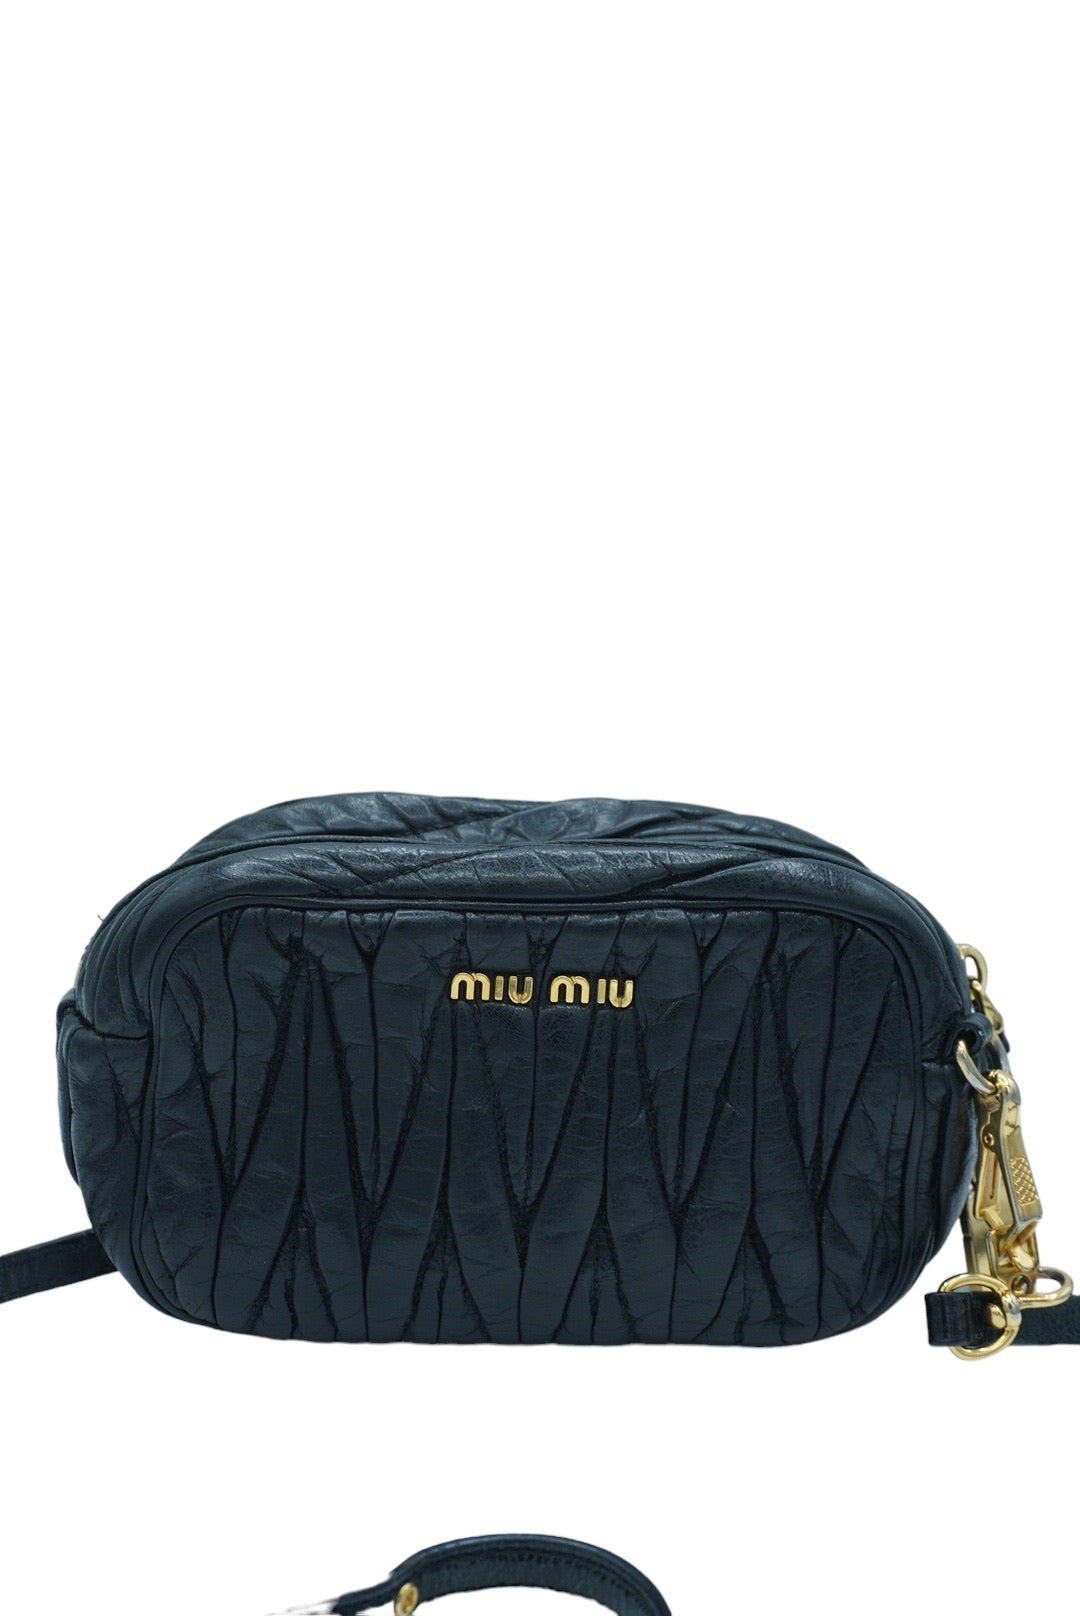 MIU MIU - Black Camera Crossbody Bag